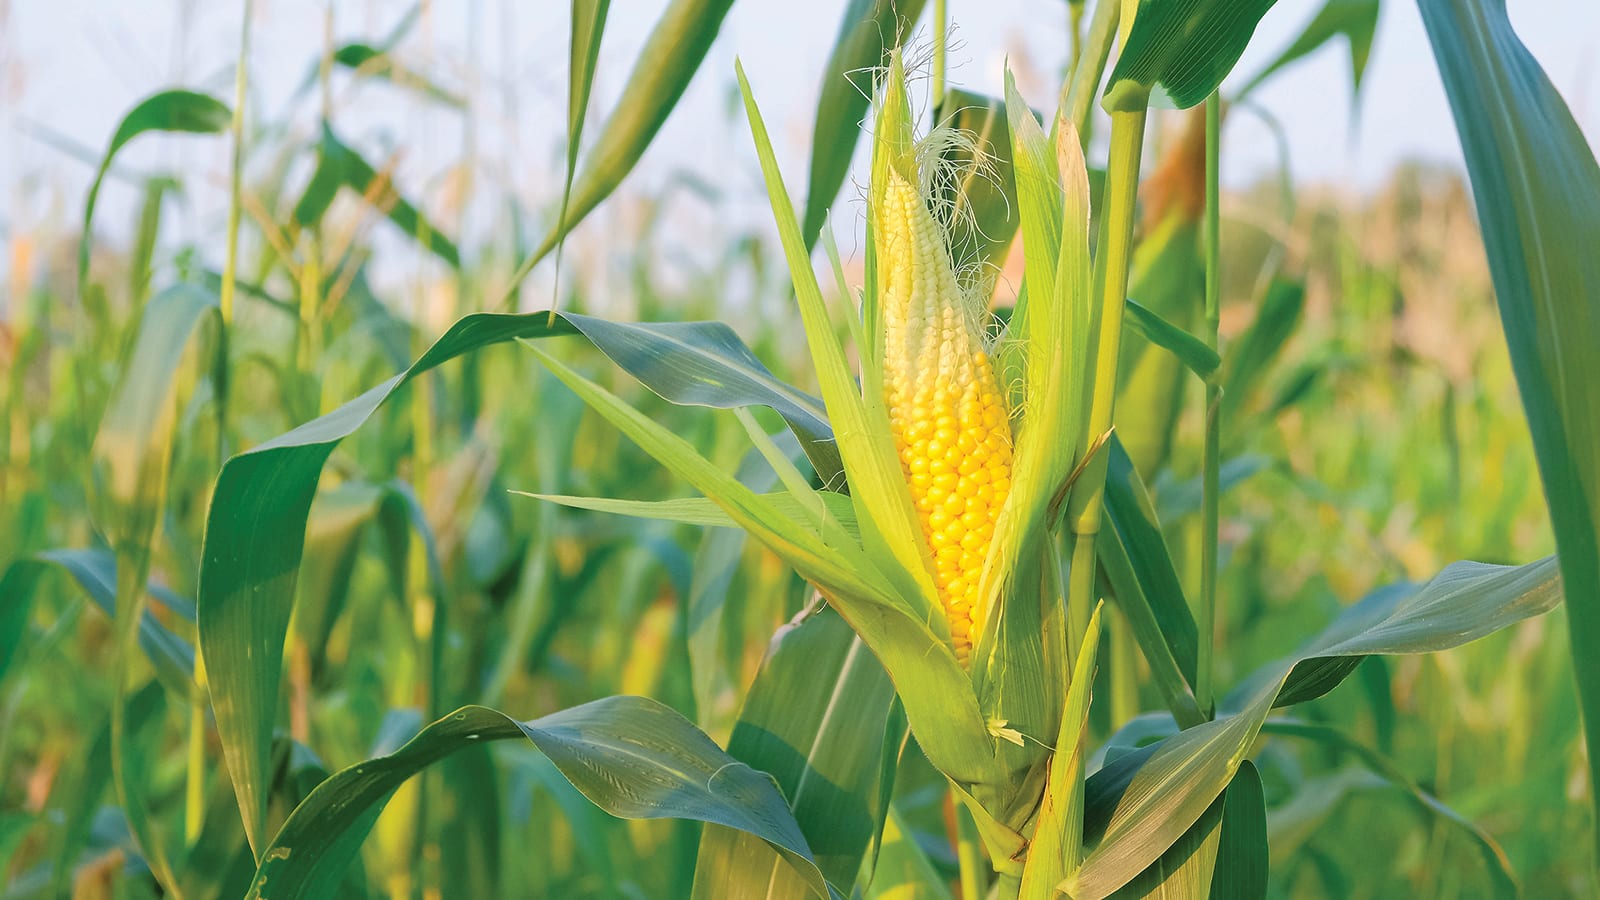 corn husks in the field